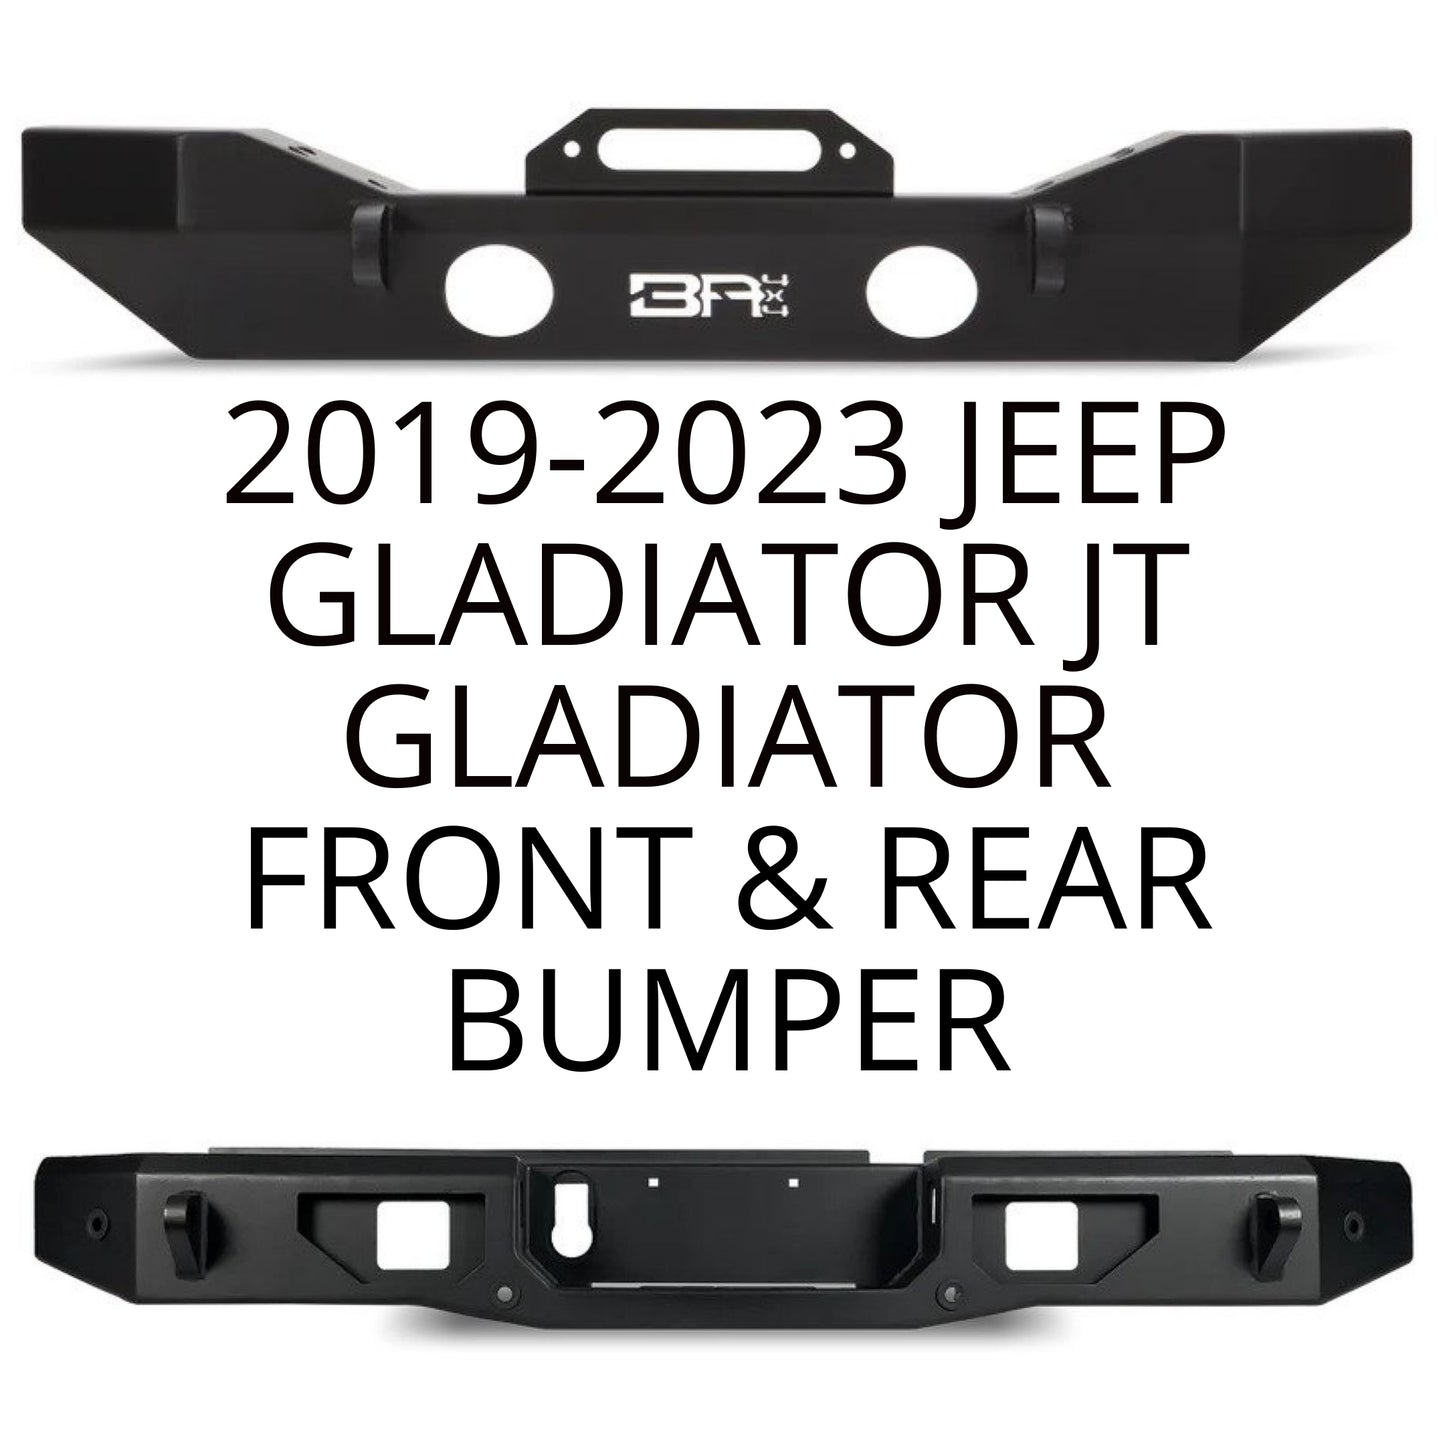 2019-2023 JEEP GLADIATOR JT GLADIATOR   FRONT & REAR BUMPER